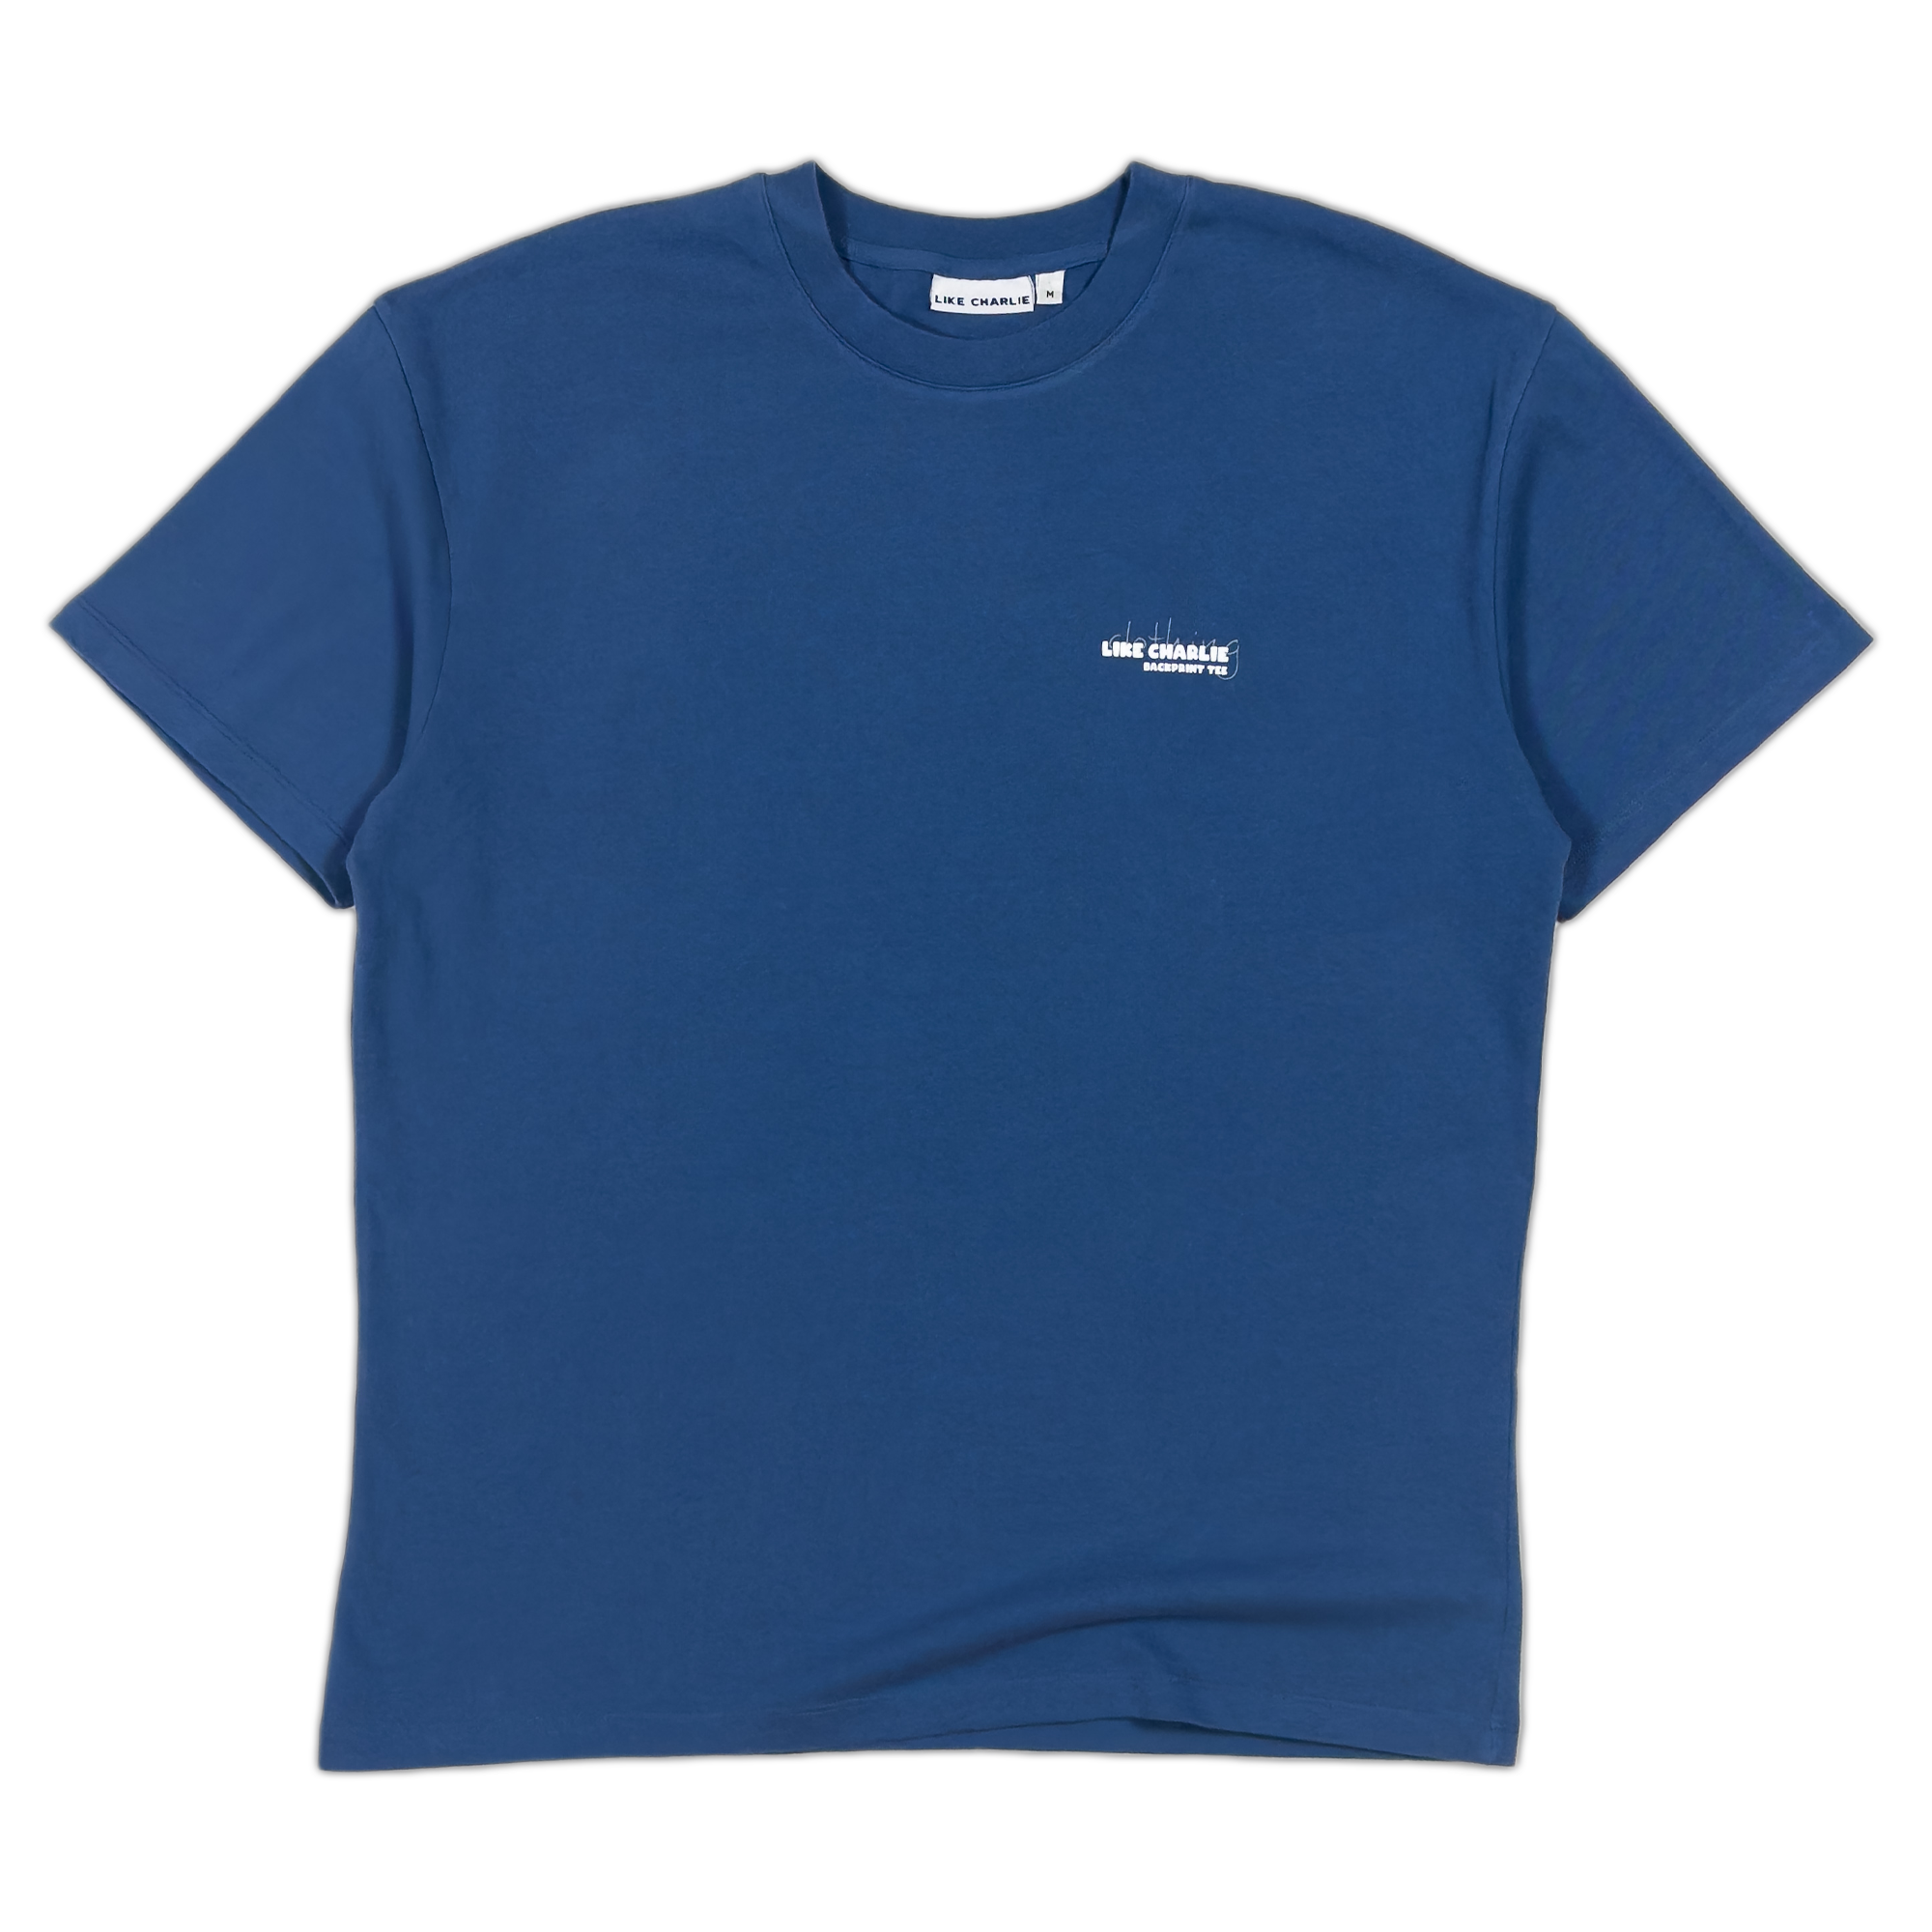 Lapis Lazuli T-shirt